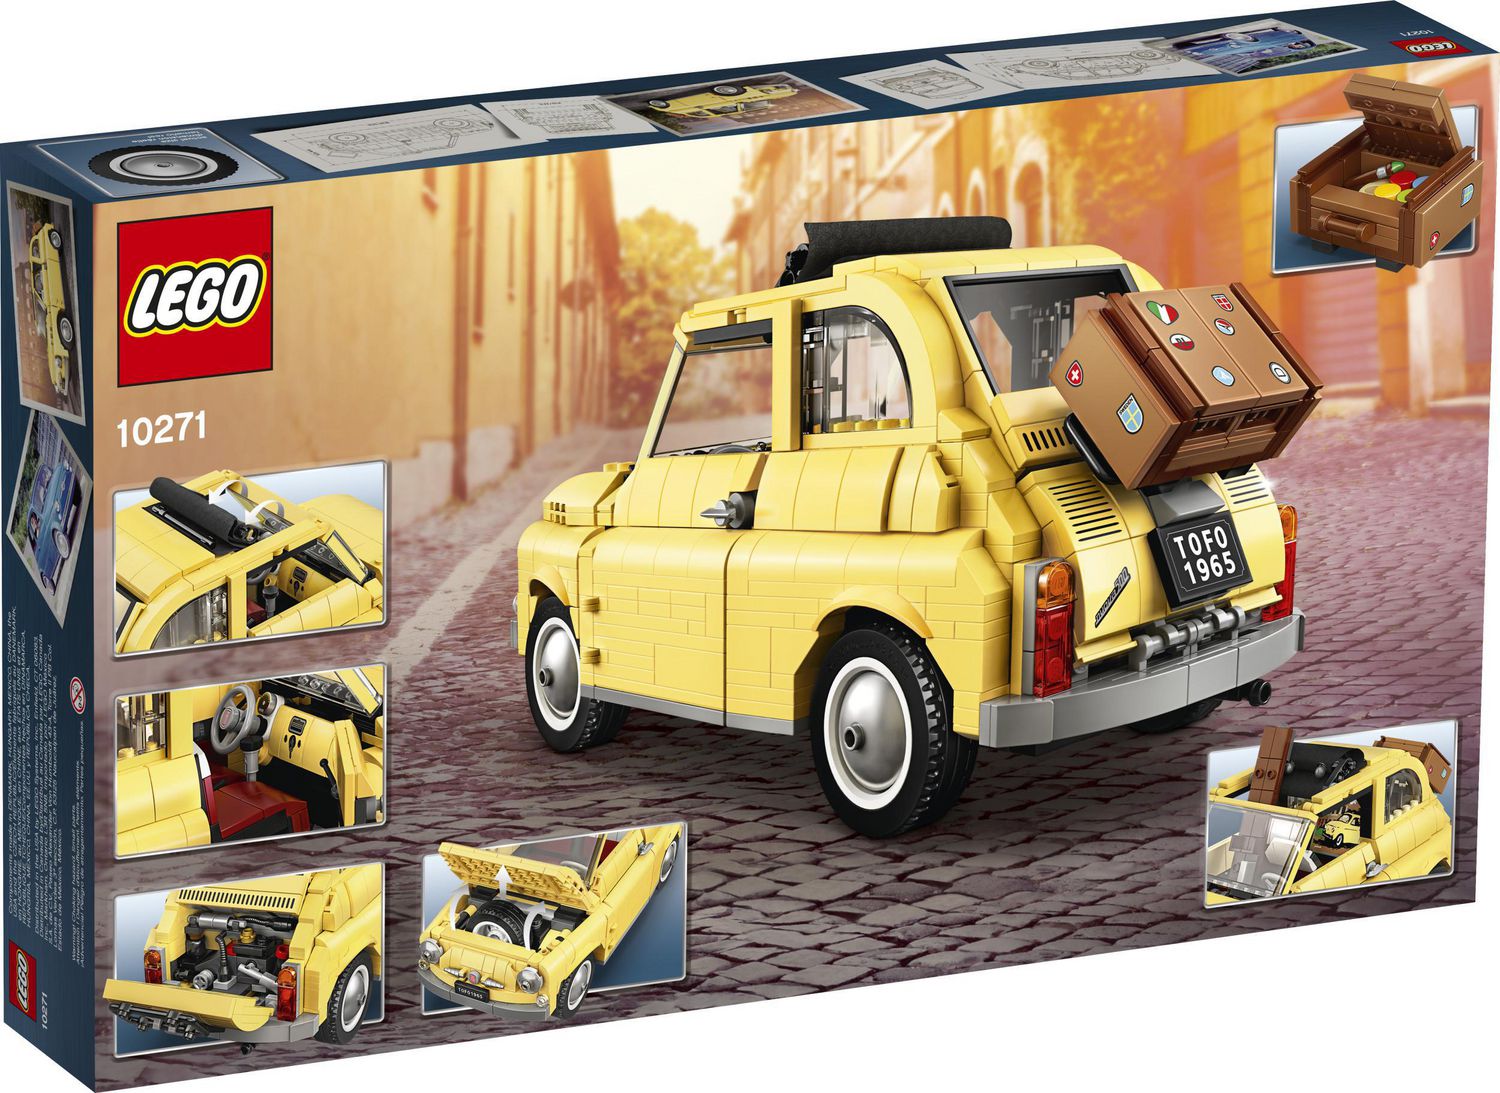 LEGO Creator Expert Fiat 500 10271 Toy Building Kit (960 Pieces